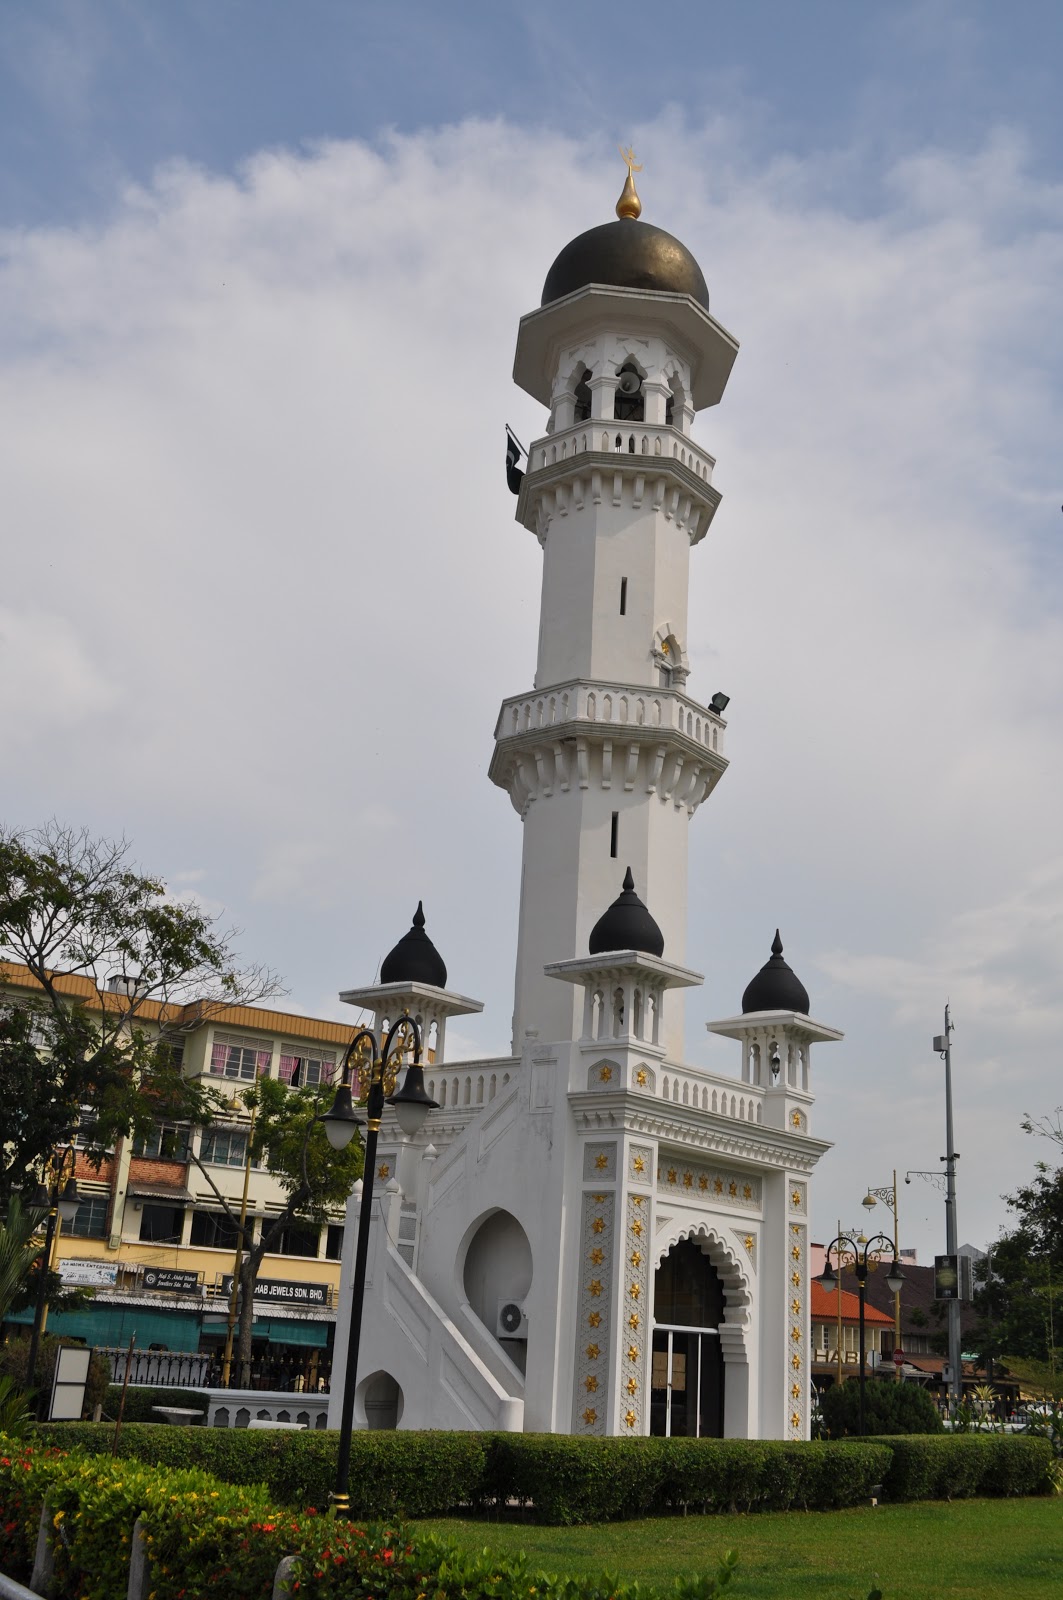 Muhammad Qul Amirul Hakim: Masjid Kapitan Keling, Pulau Pinang